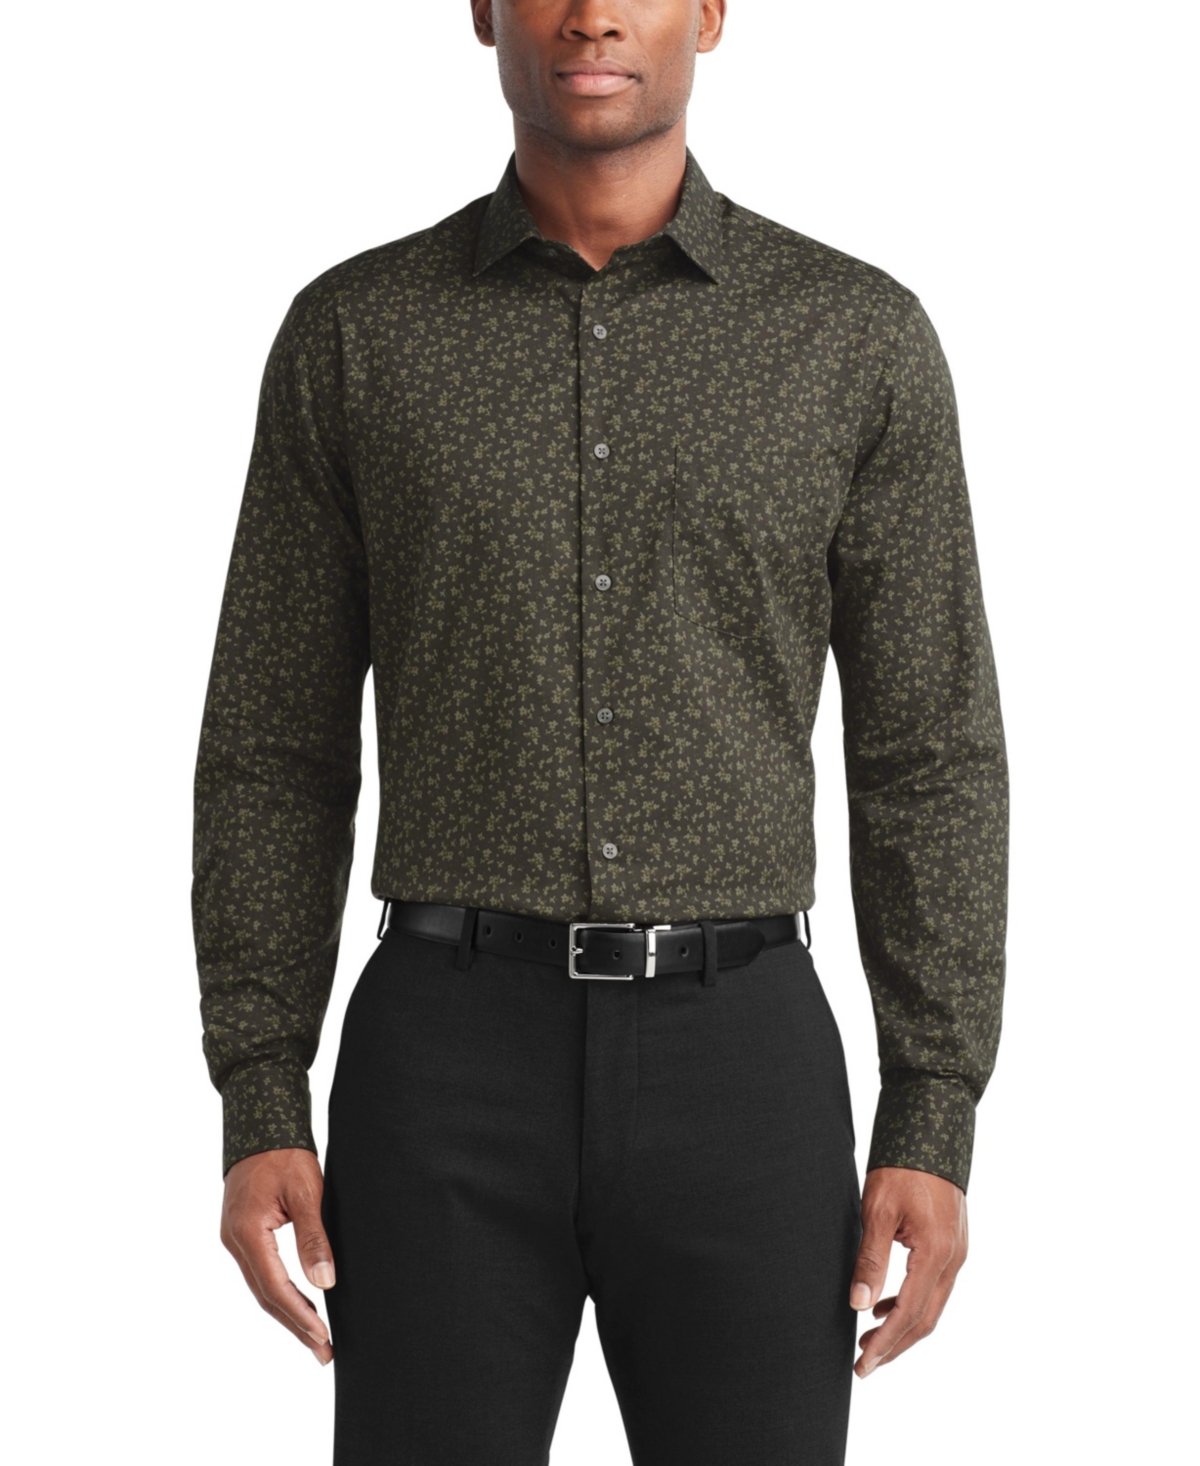 Men's Stain Shield Regular Fit Dress Shirt - Camo Green